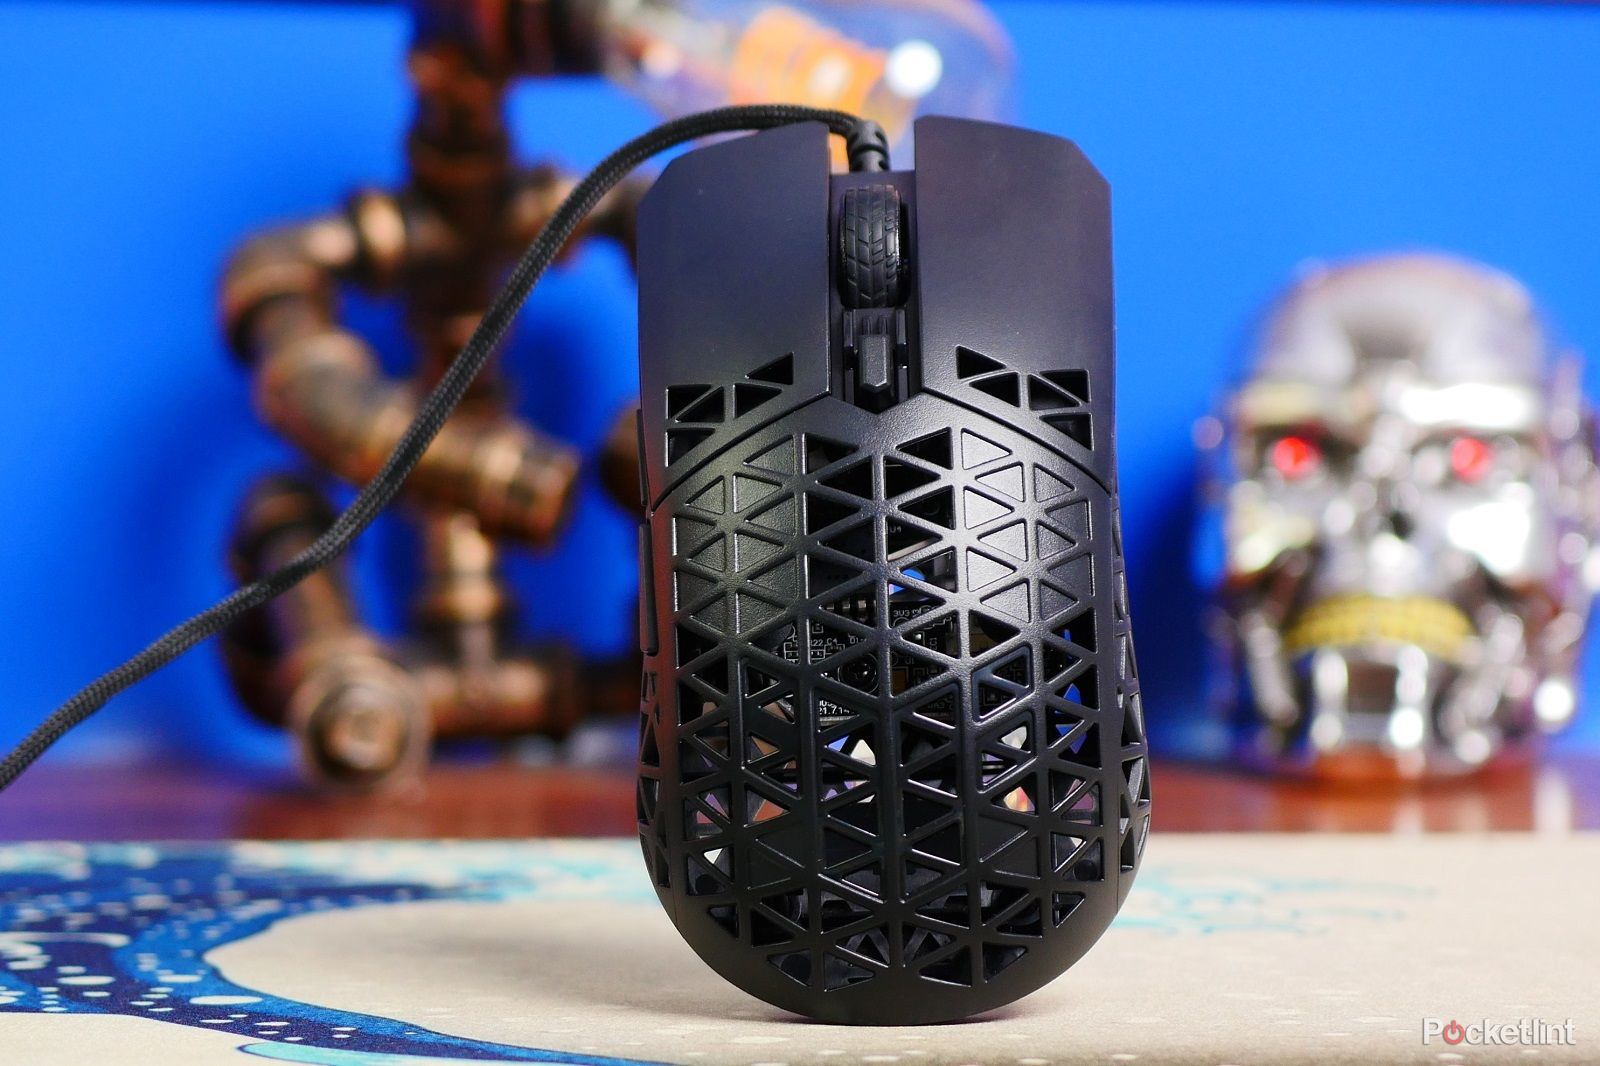 Asus TUF gaming M4 Air mouse review photo 7